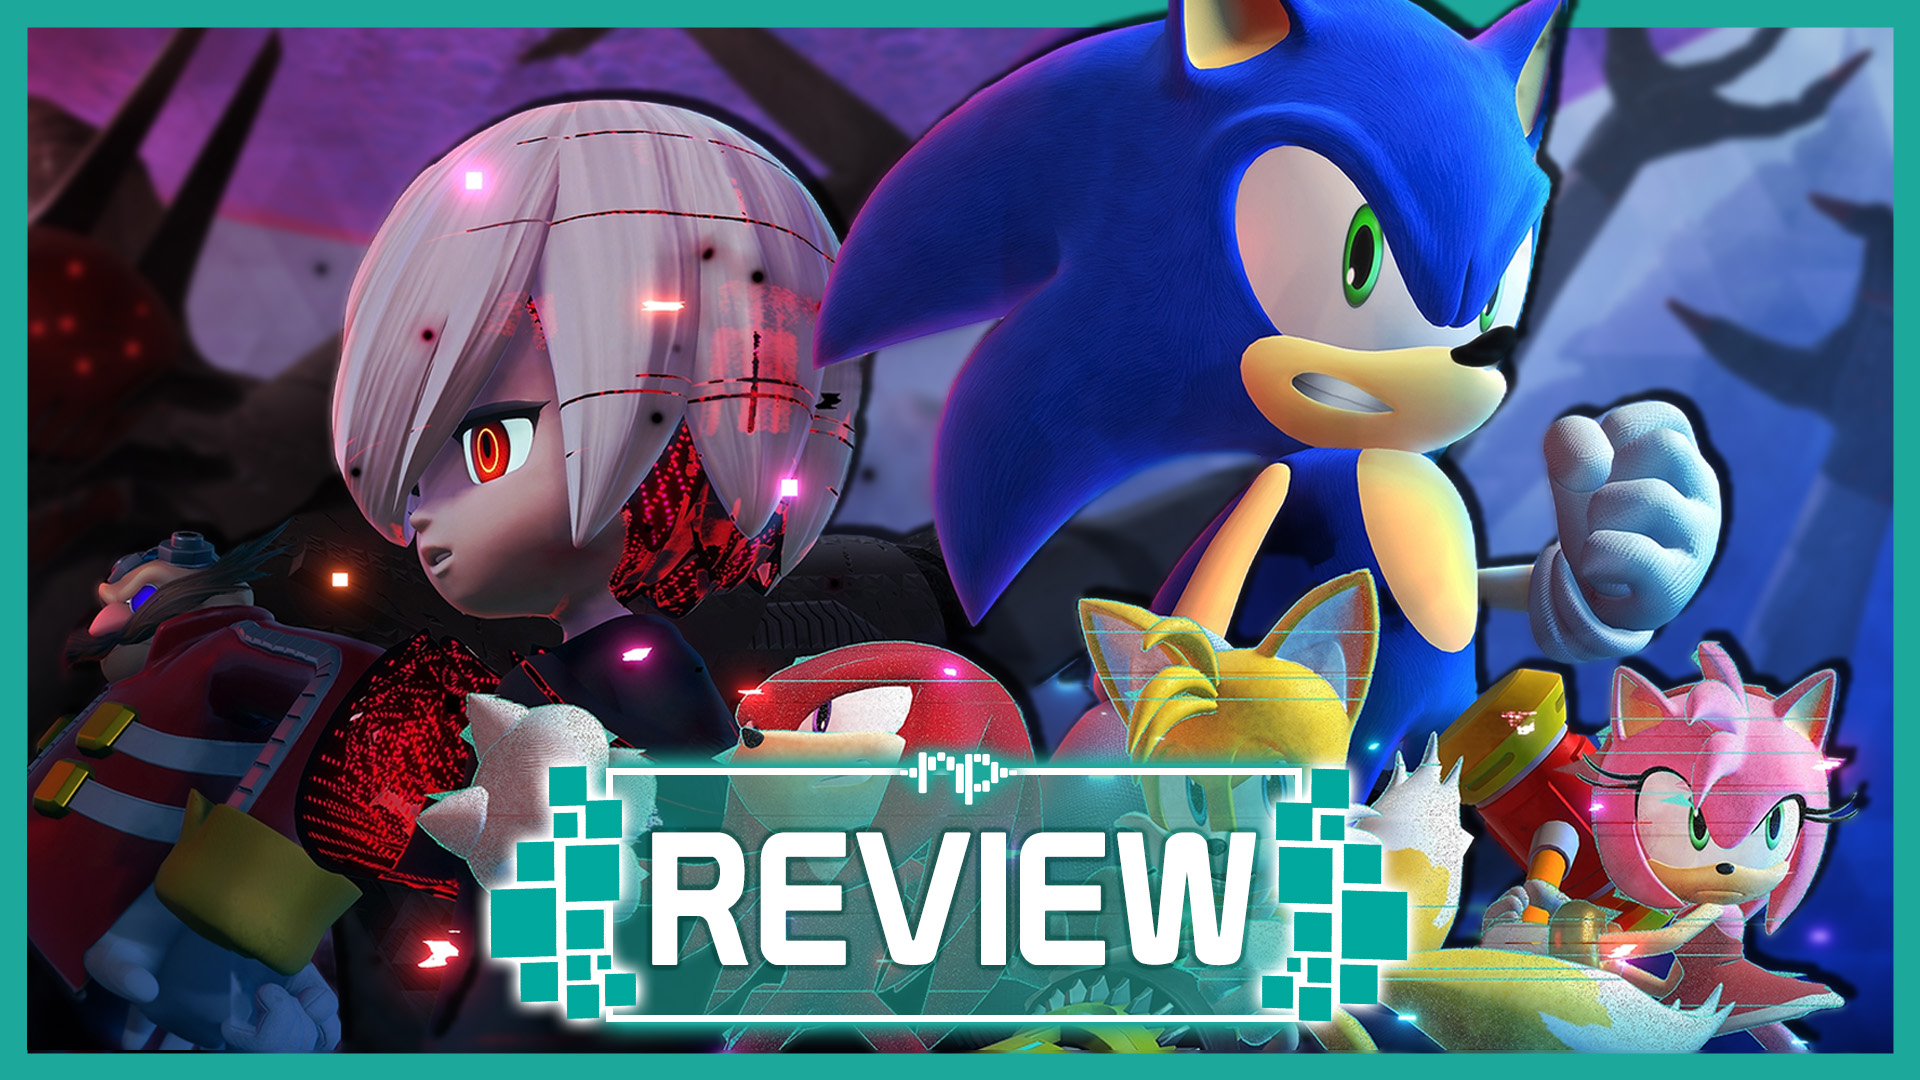 Sonic R - Metacritic